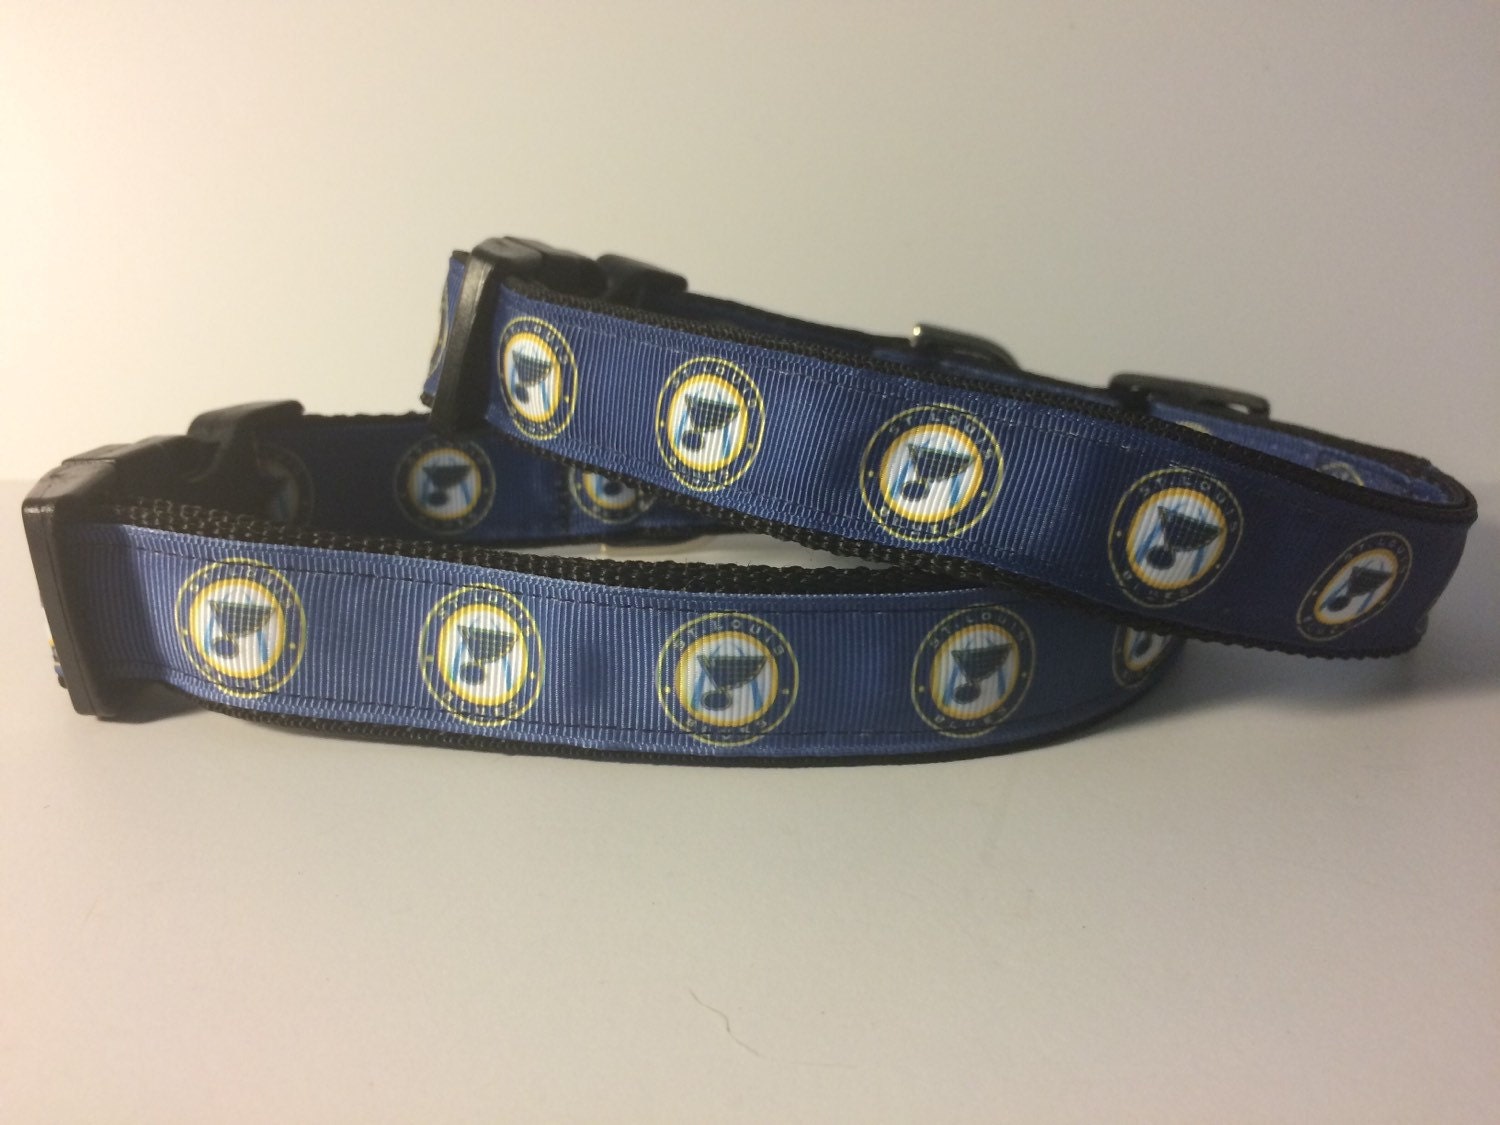 PINK ST Saint Louis Cardinals and Blues Combo MLB NHL Designer Dog Collar –  Custom Design Dog Collars